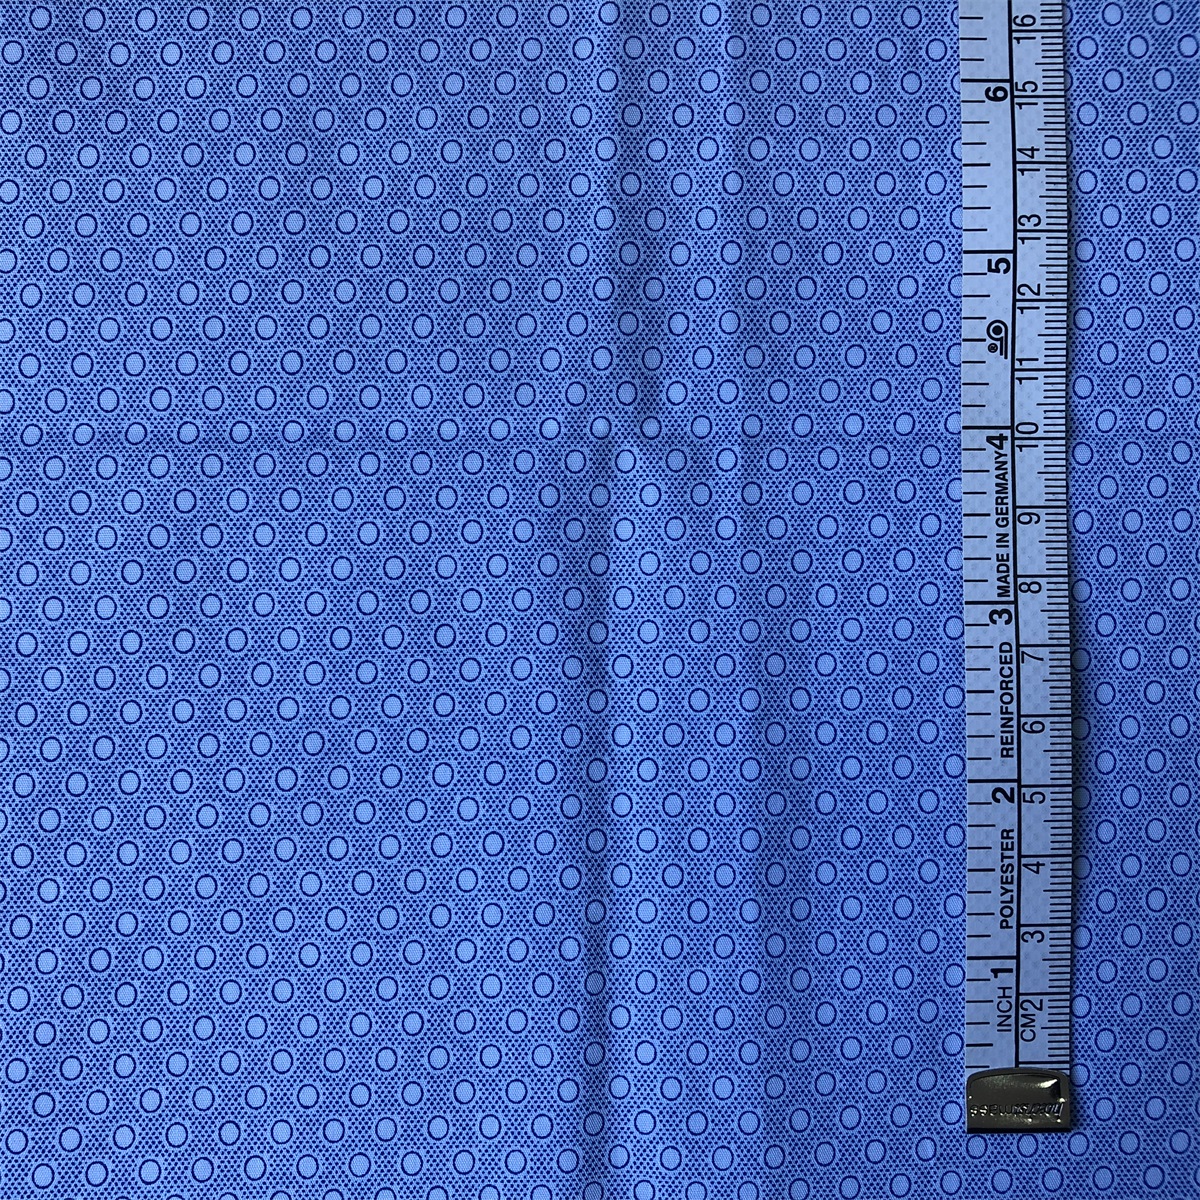 Sun-rising Textile Cotton Printed fabric for men's shirts 100% cotton poplin printed shirts woven fabric soft comfortable